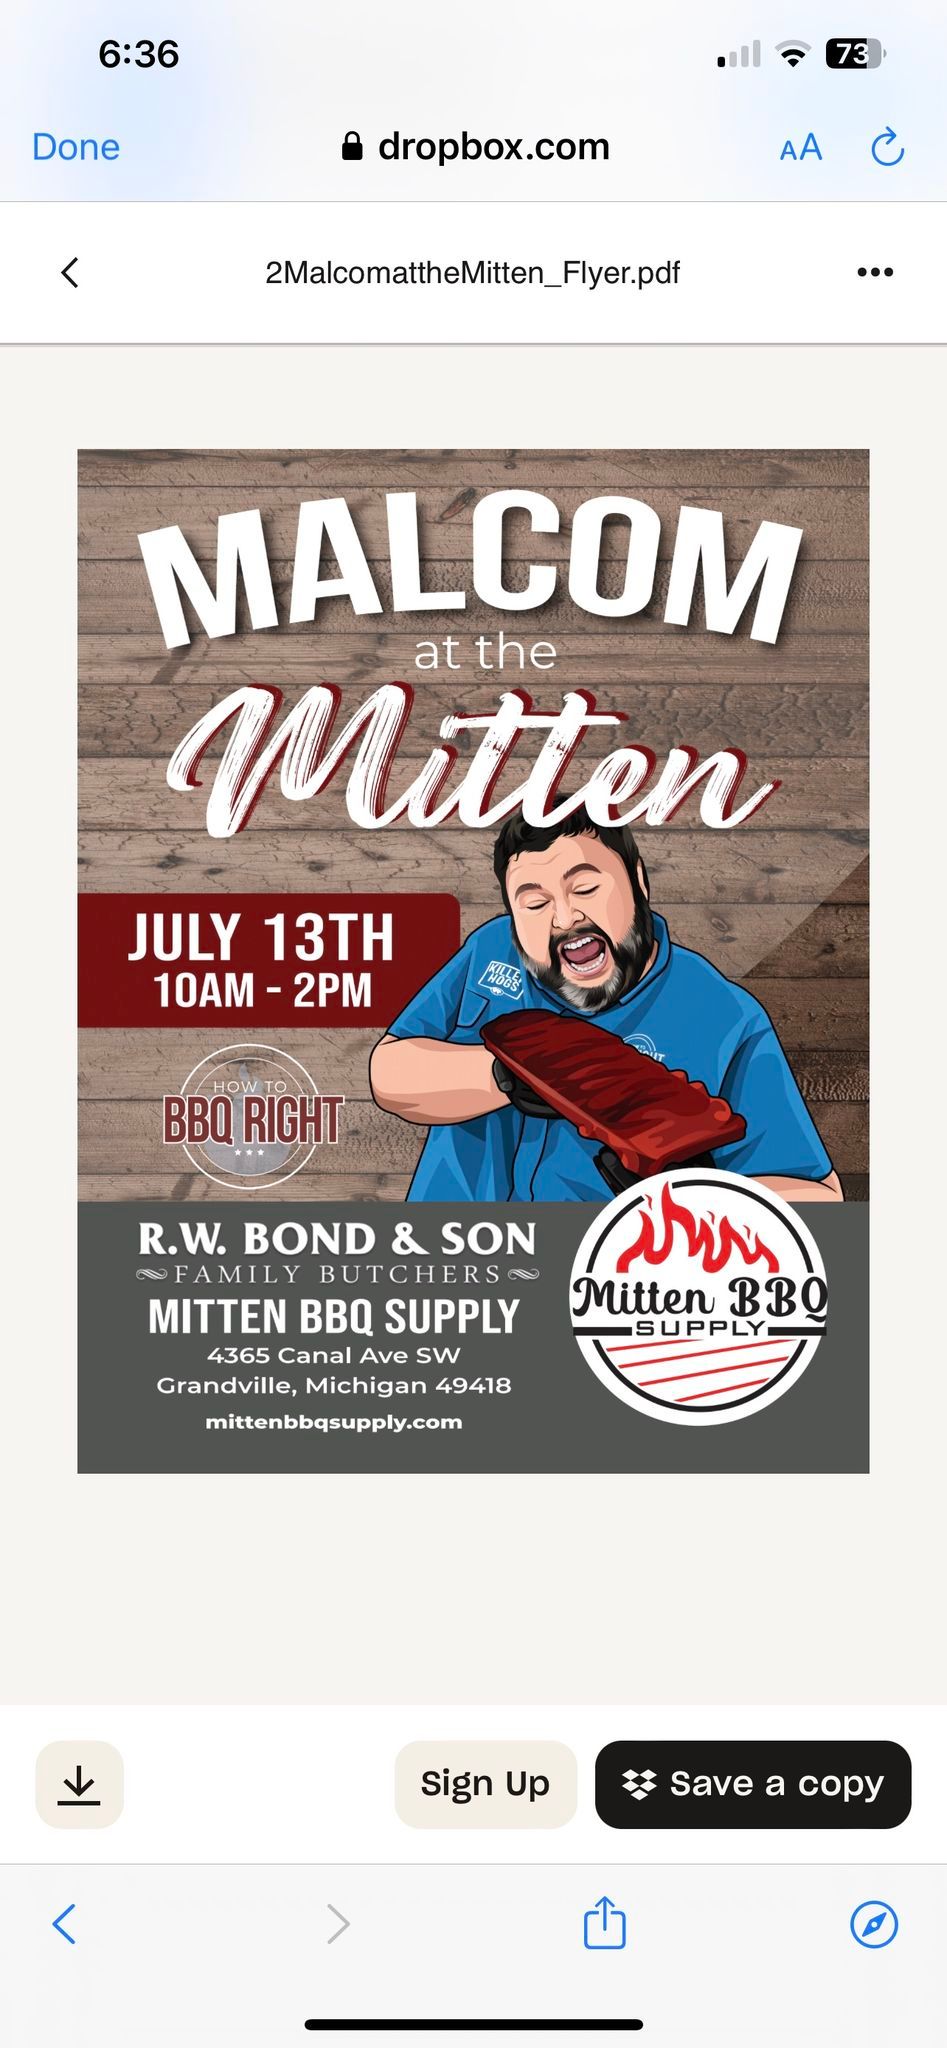 Malcom at the Mitten